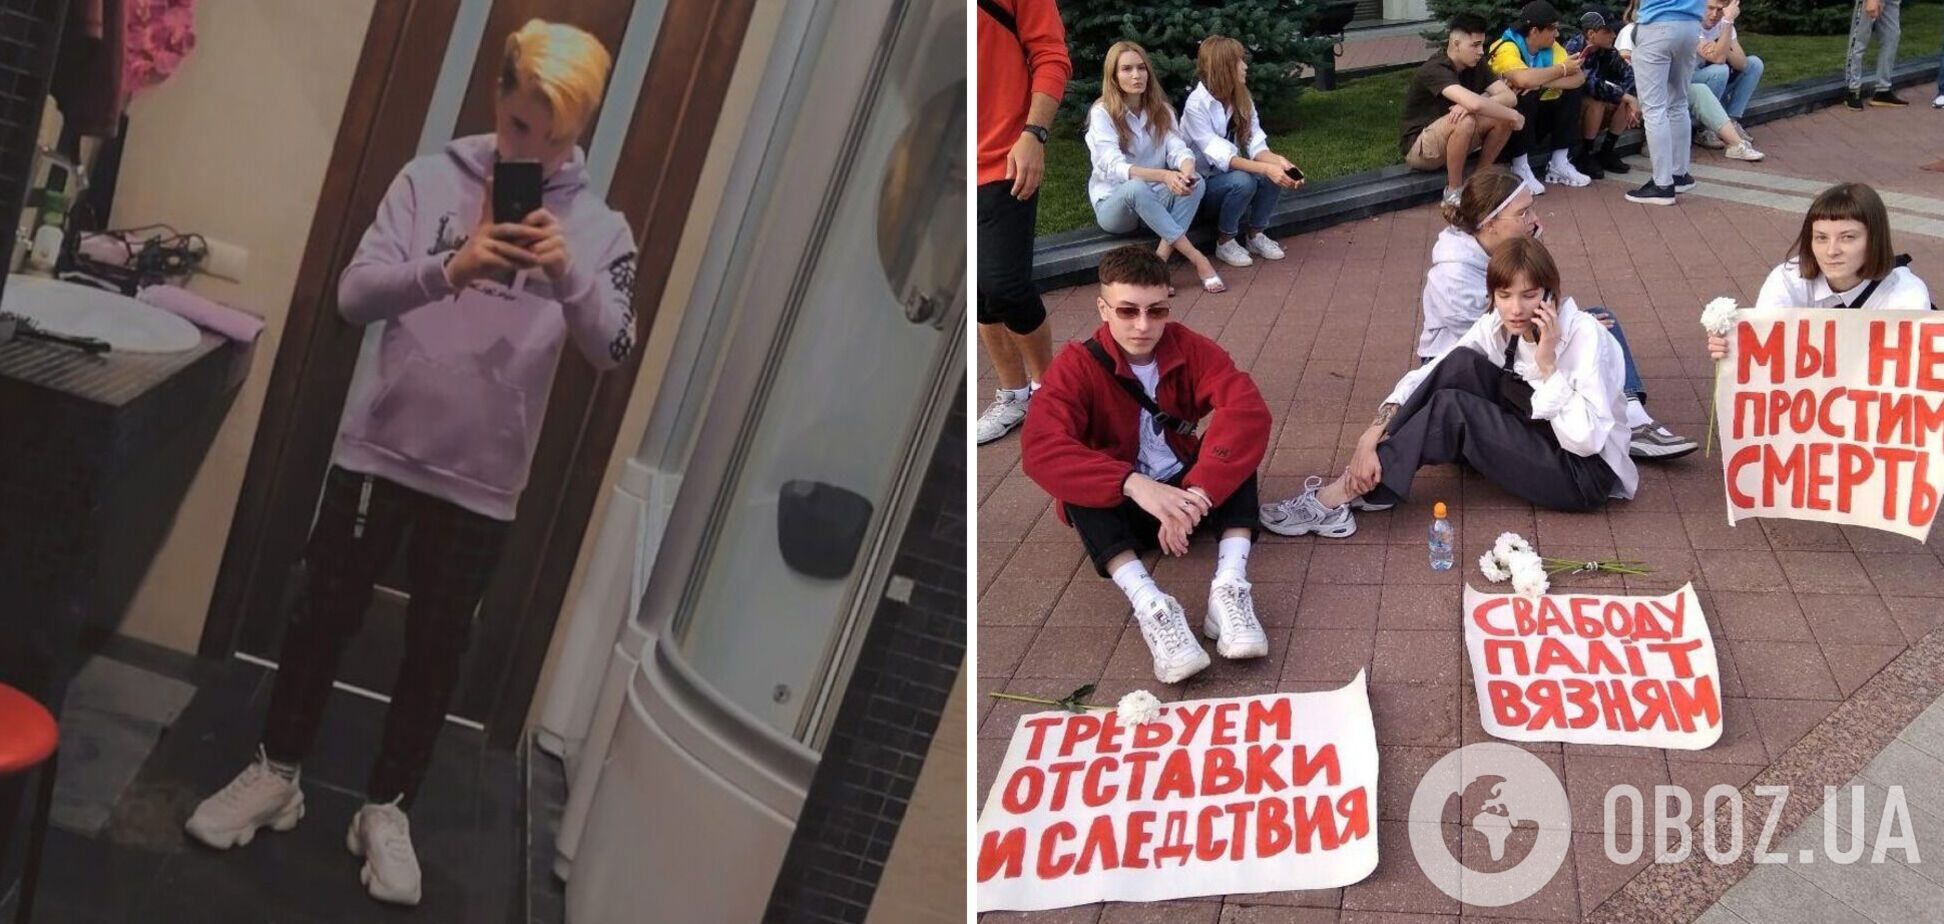 В Минске подросток покончил с собой из-за преследования после протестов: опубликована предсмертная записка